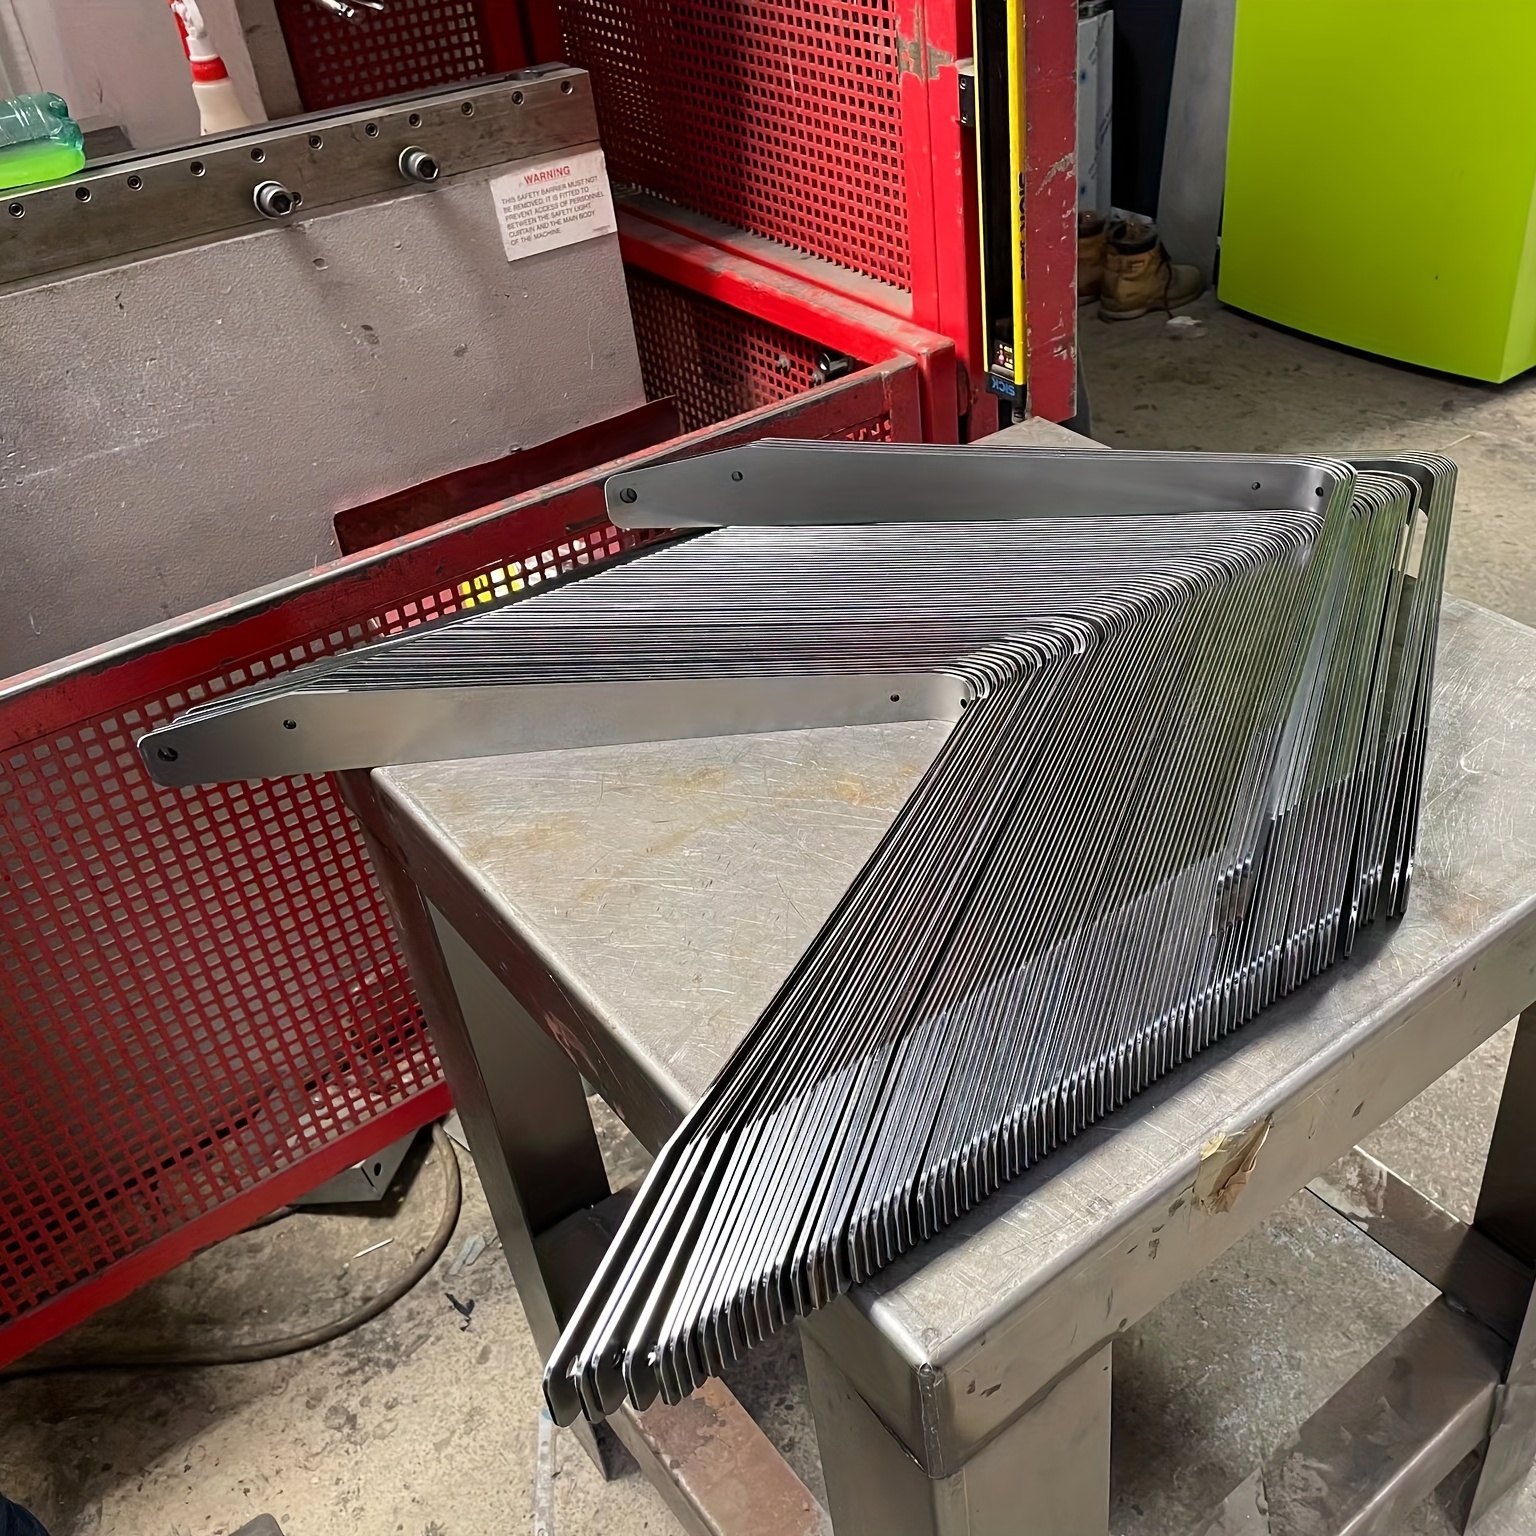 5052 Aluminum Sheet Metal 12 X 12 X 1/64 (0.02”) Inch Thin Flat Plain  Aluminum Plate Panel Covered With Protective Film, Heat Treatable Aluminum  Sheet